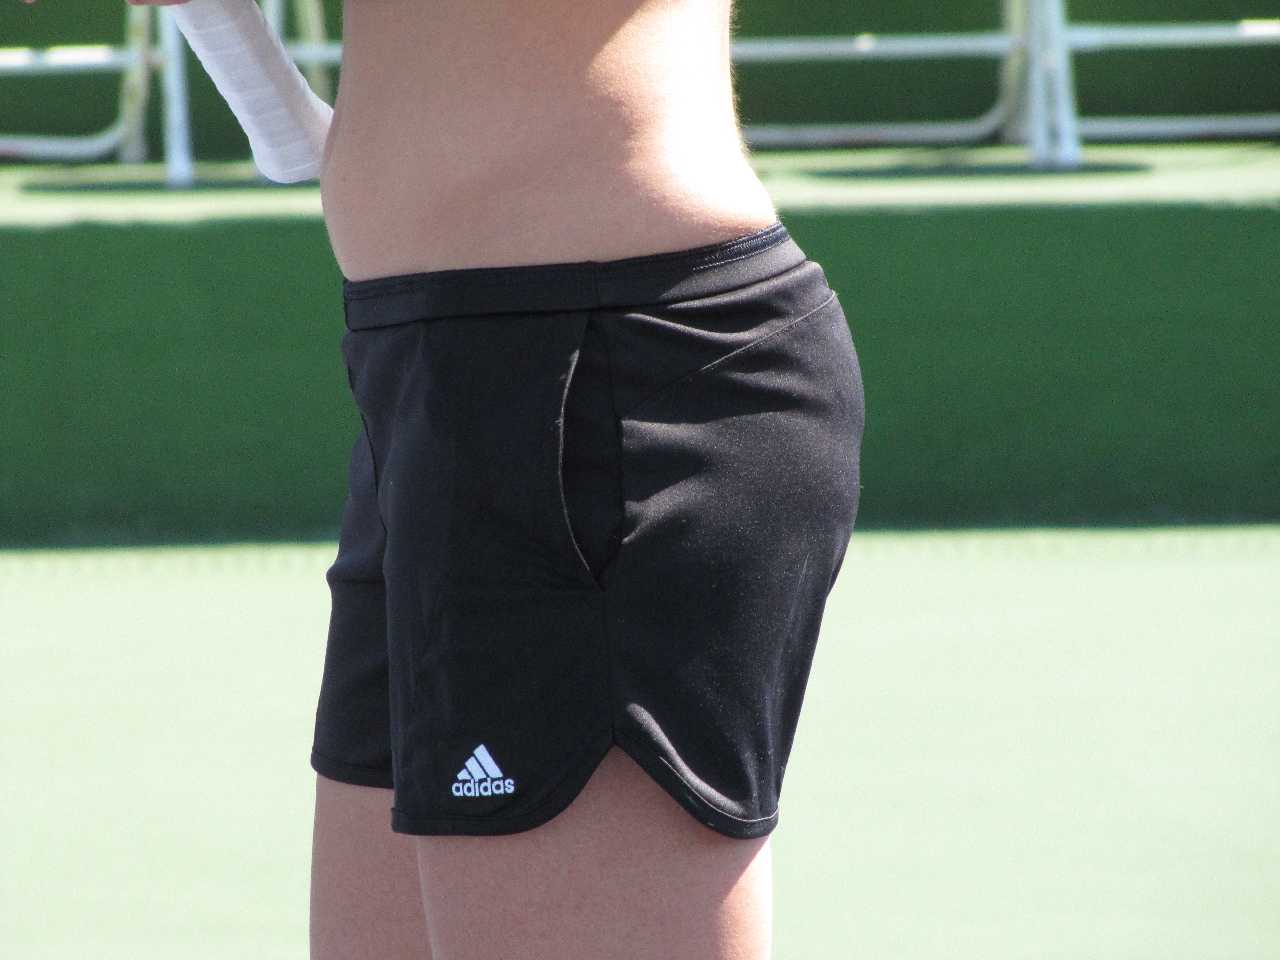 http://1.bp.blogspot.com/-OlD9LyvxBwg/To_Qh1-67kI/AAAAAAAAZLg/P8W4xw8Vd8M/s1600/Flavia+Pennetta+hot+bikini+top+on+tennis+practice+08.jpg